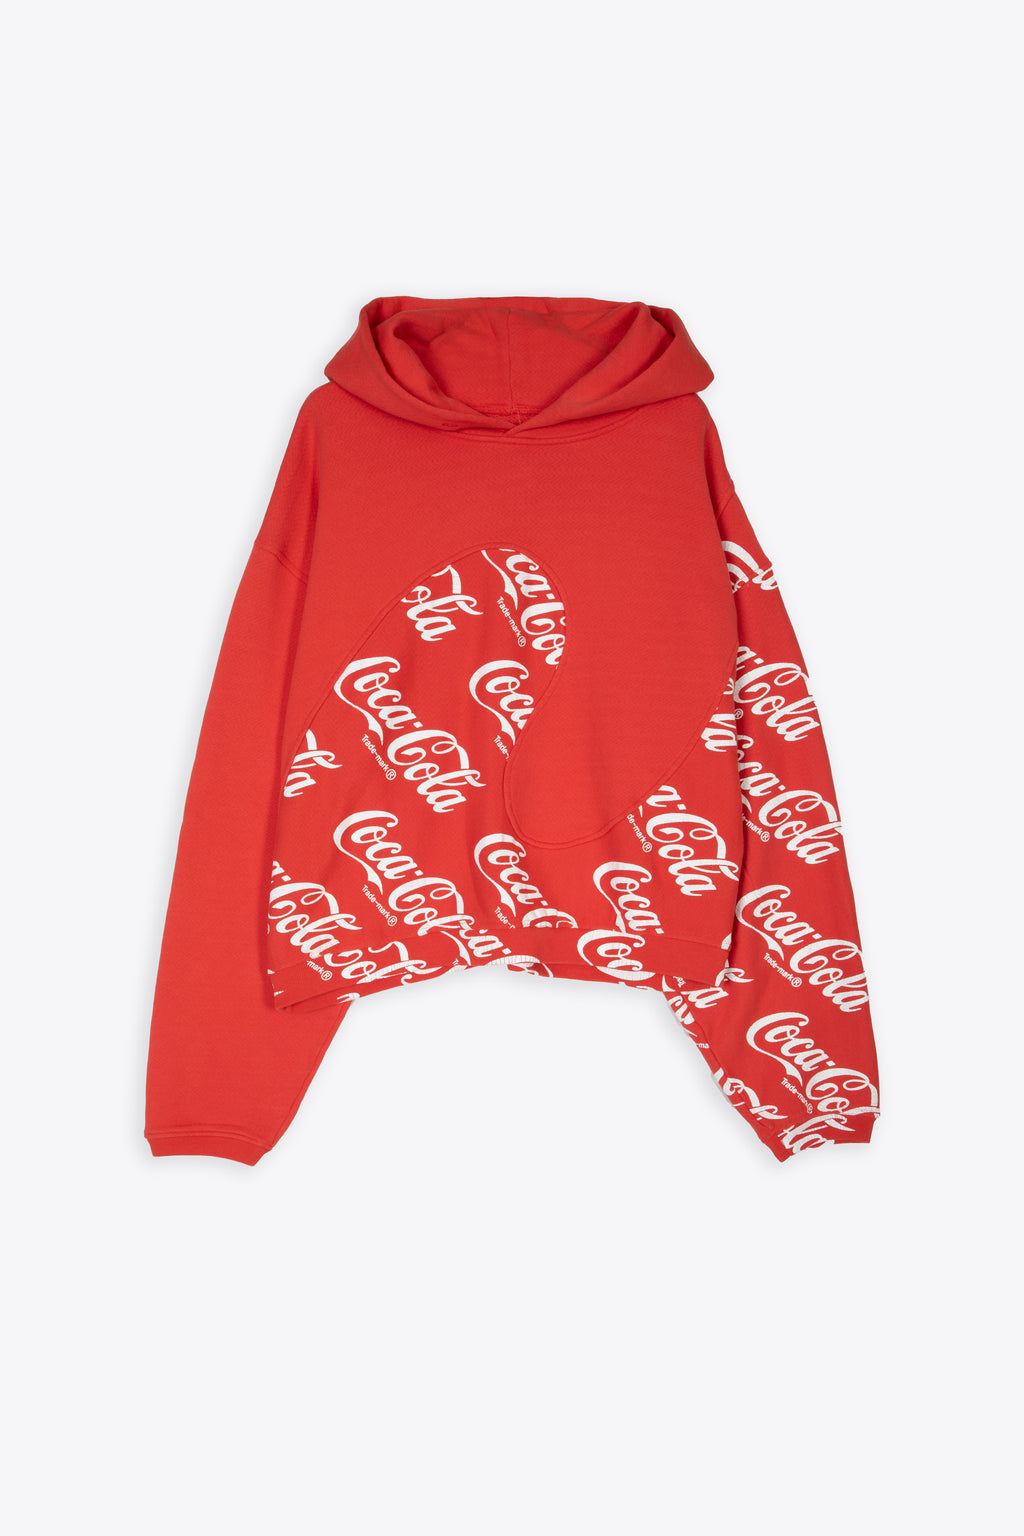 alt-image__Red-Coca-Cola-swirl-hoodie---Men-Coca-Cola-Swirl-Hoodie-Knit-